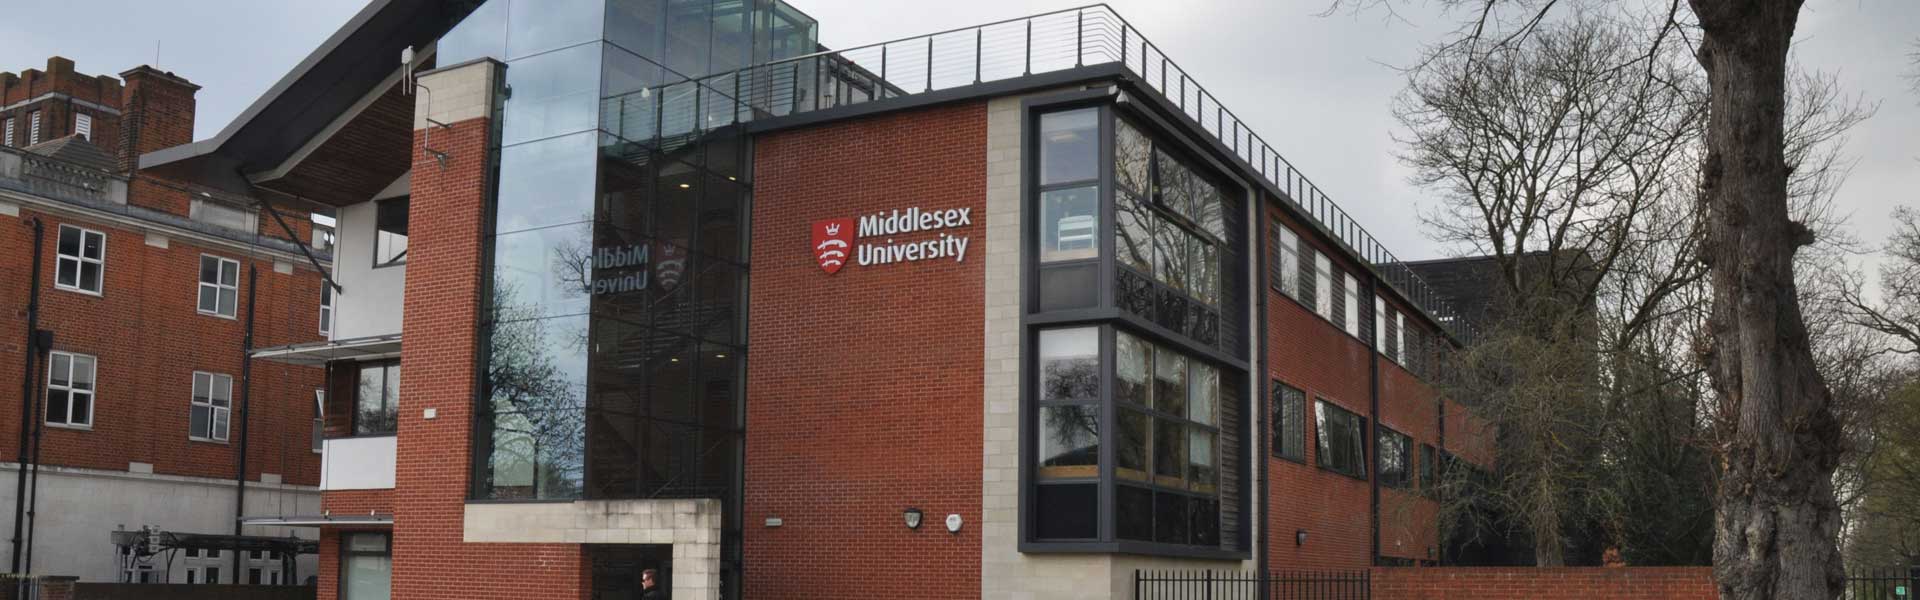 Middlesex University - Study in UK